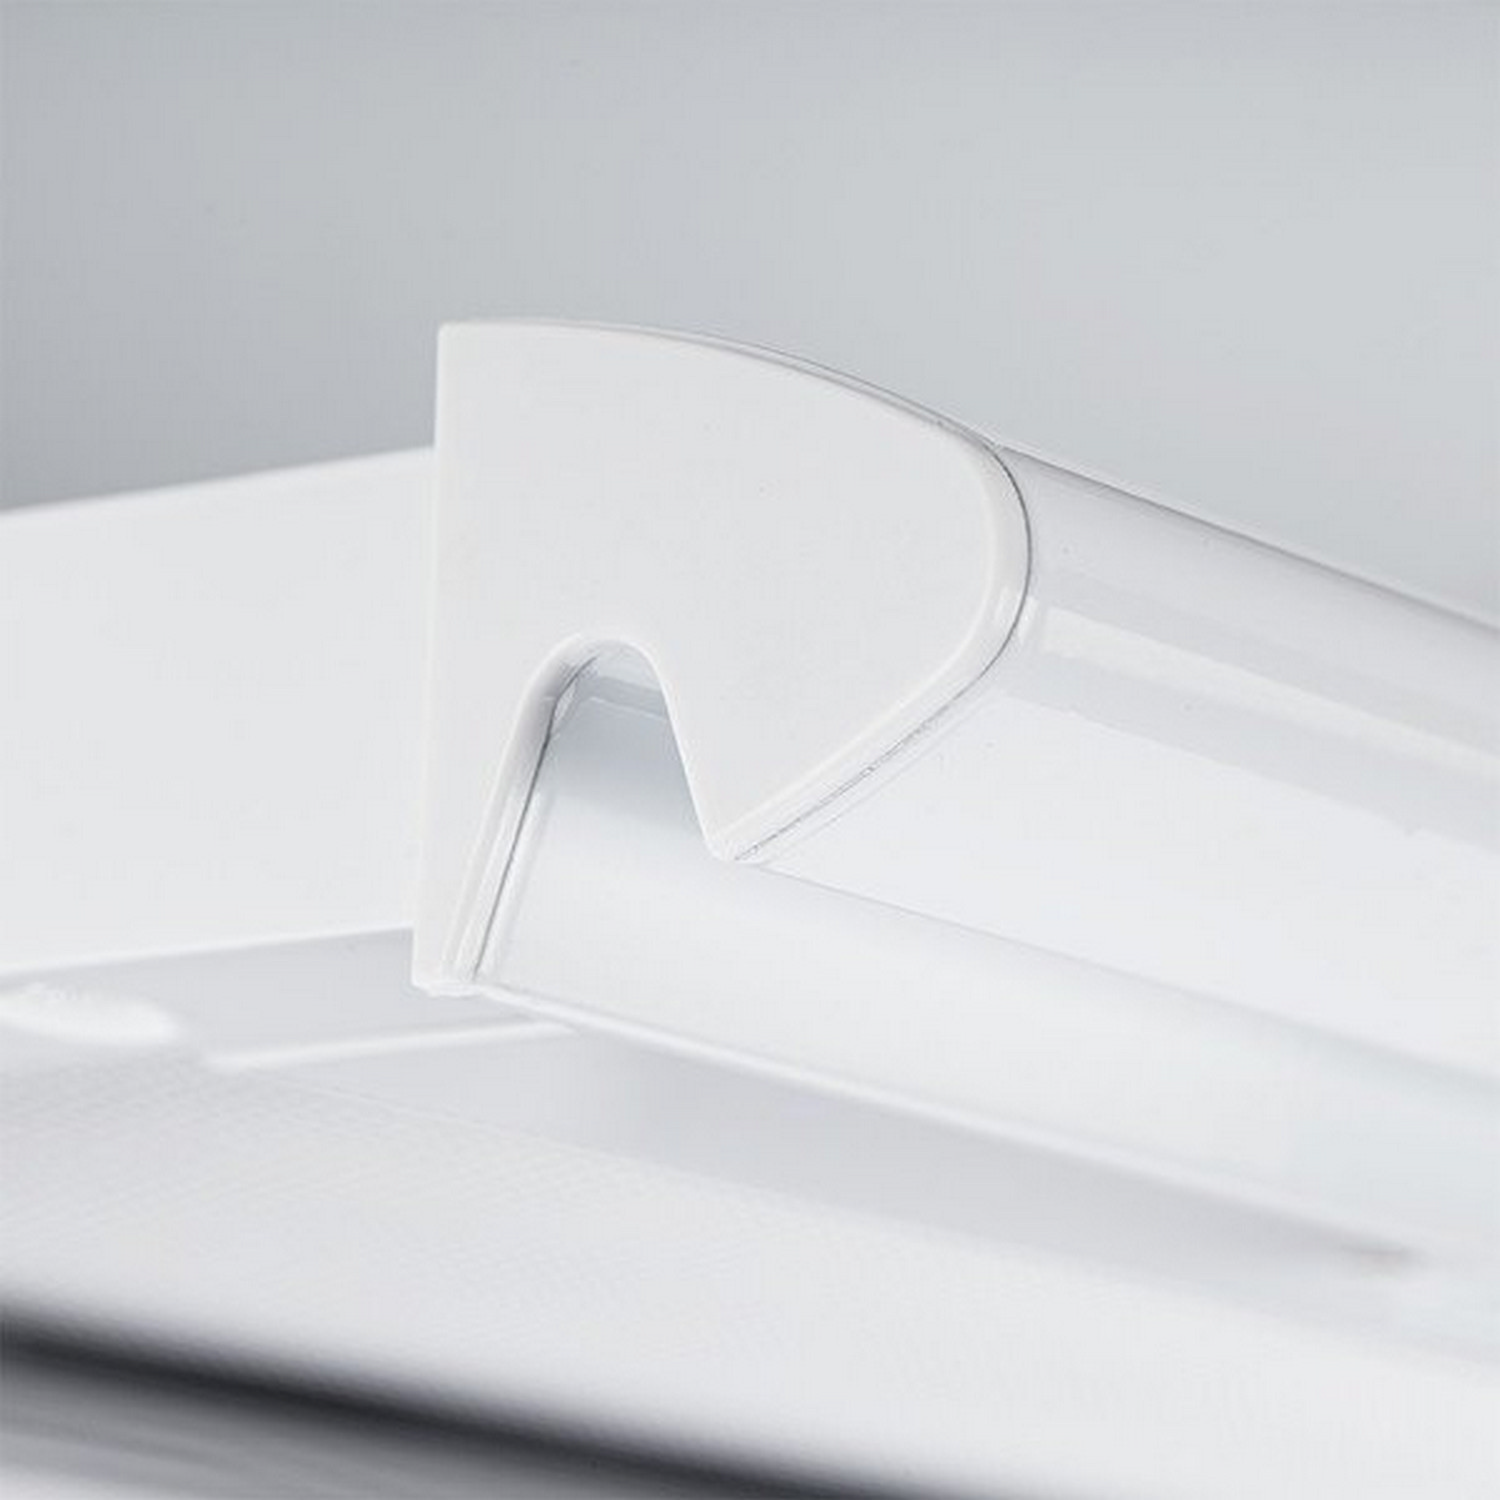 Кухонная вытяжка Cata TF-5250 Blanca (White) обзор - фото 8